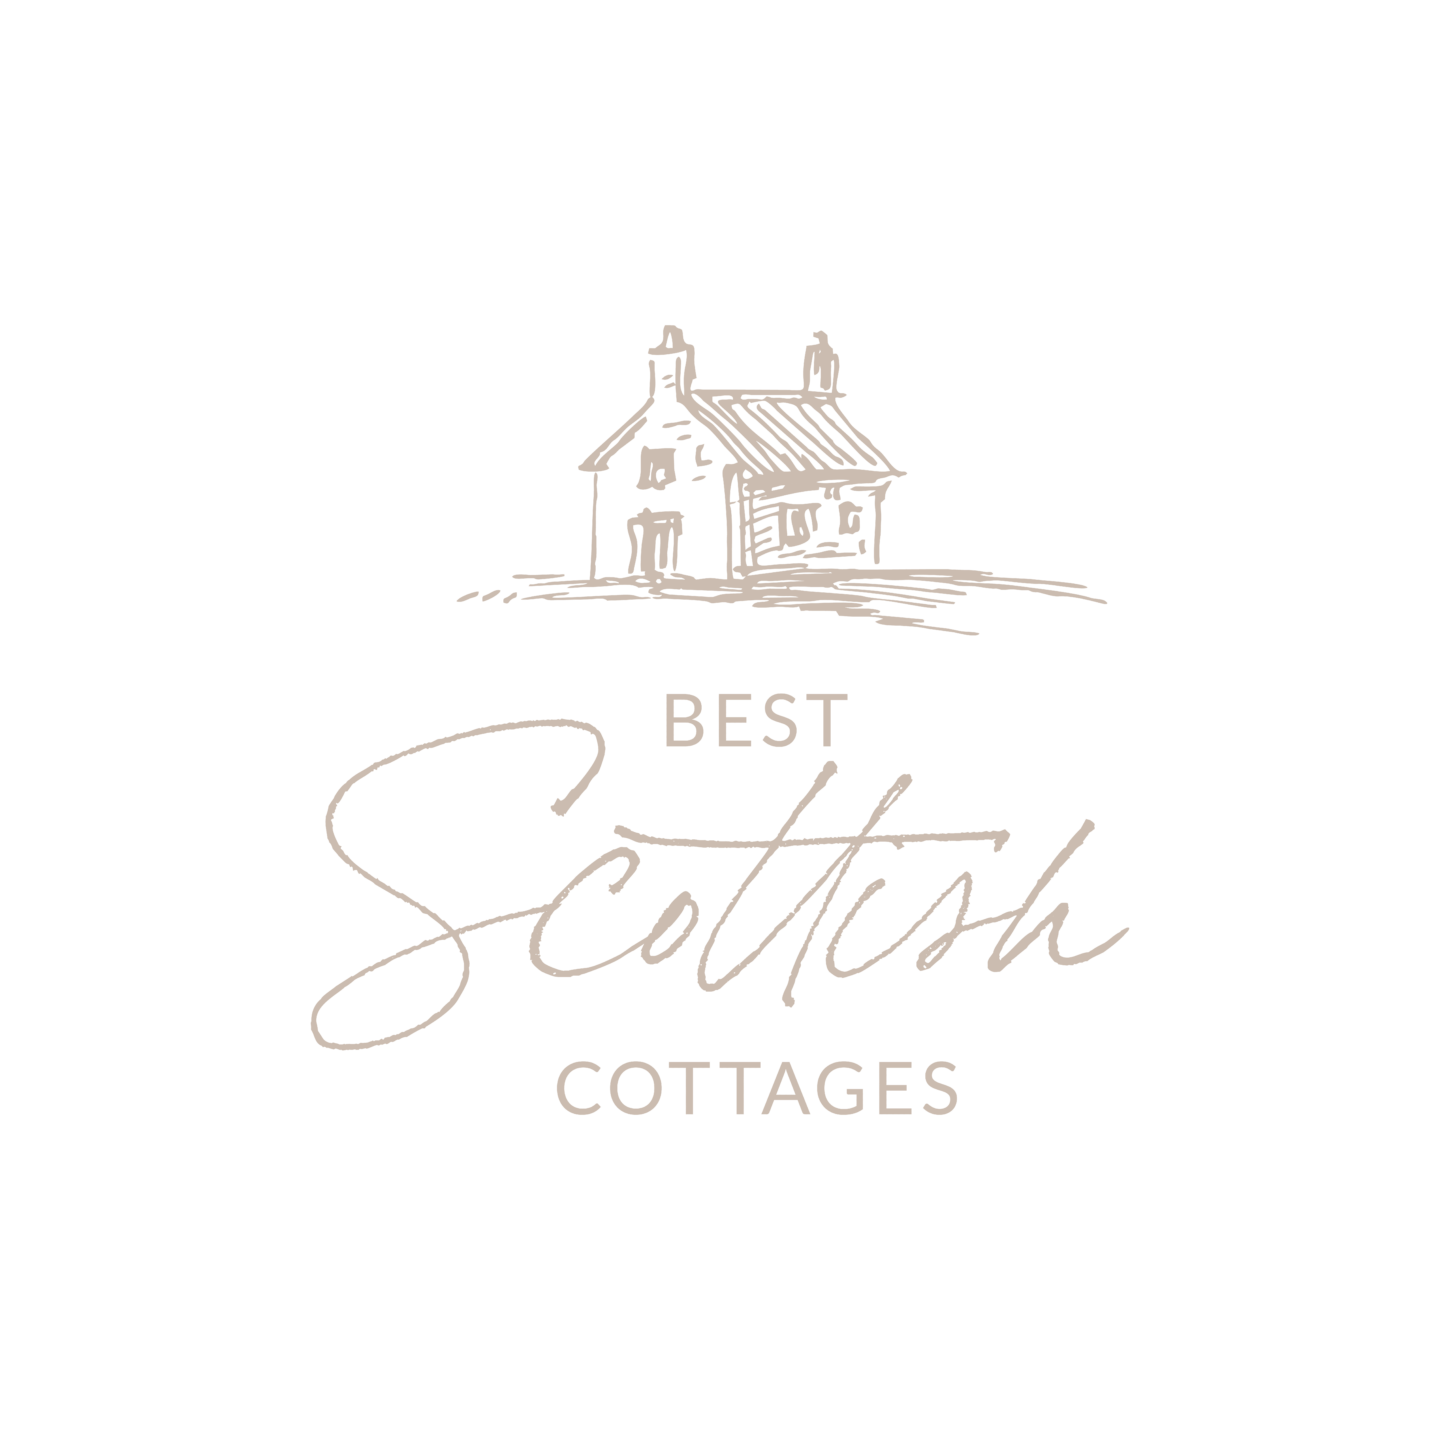 Best Scottish Cottages